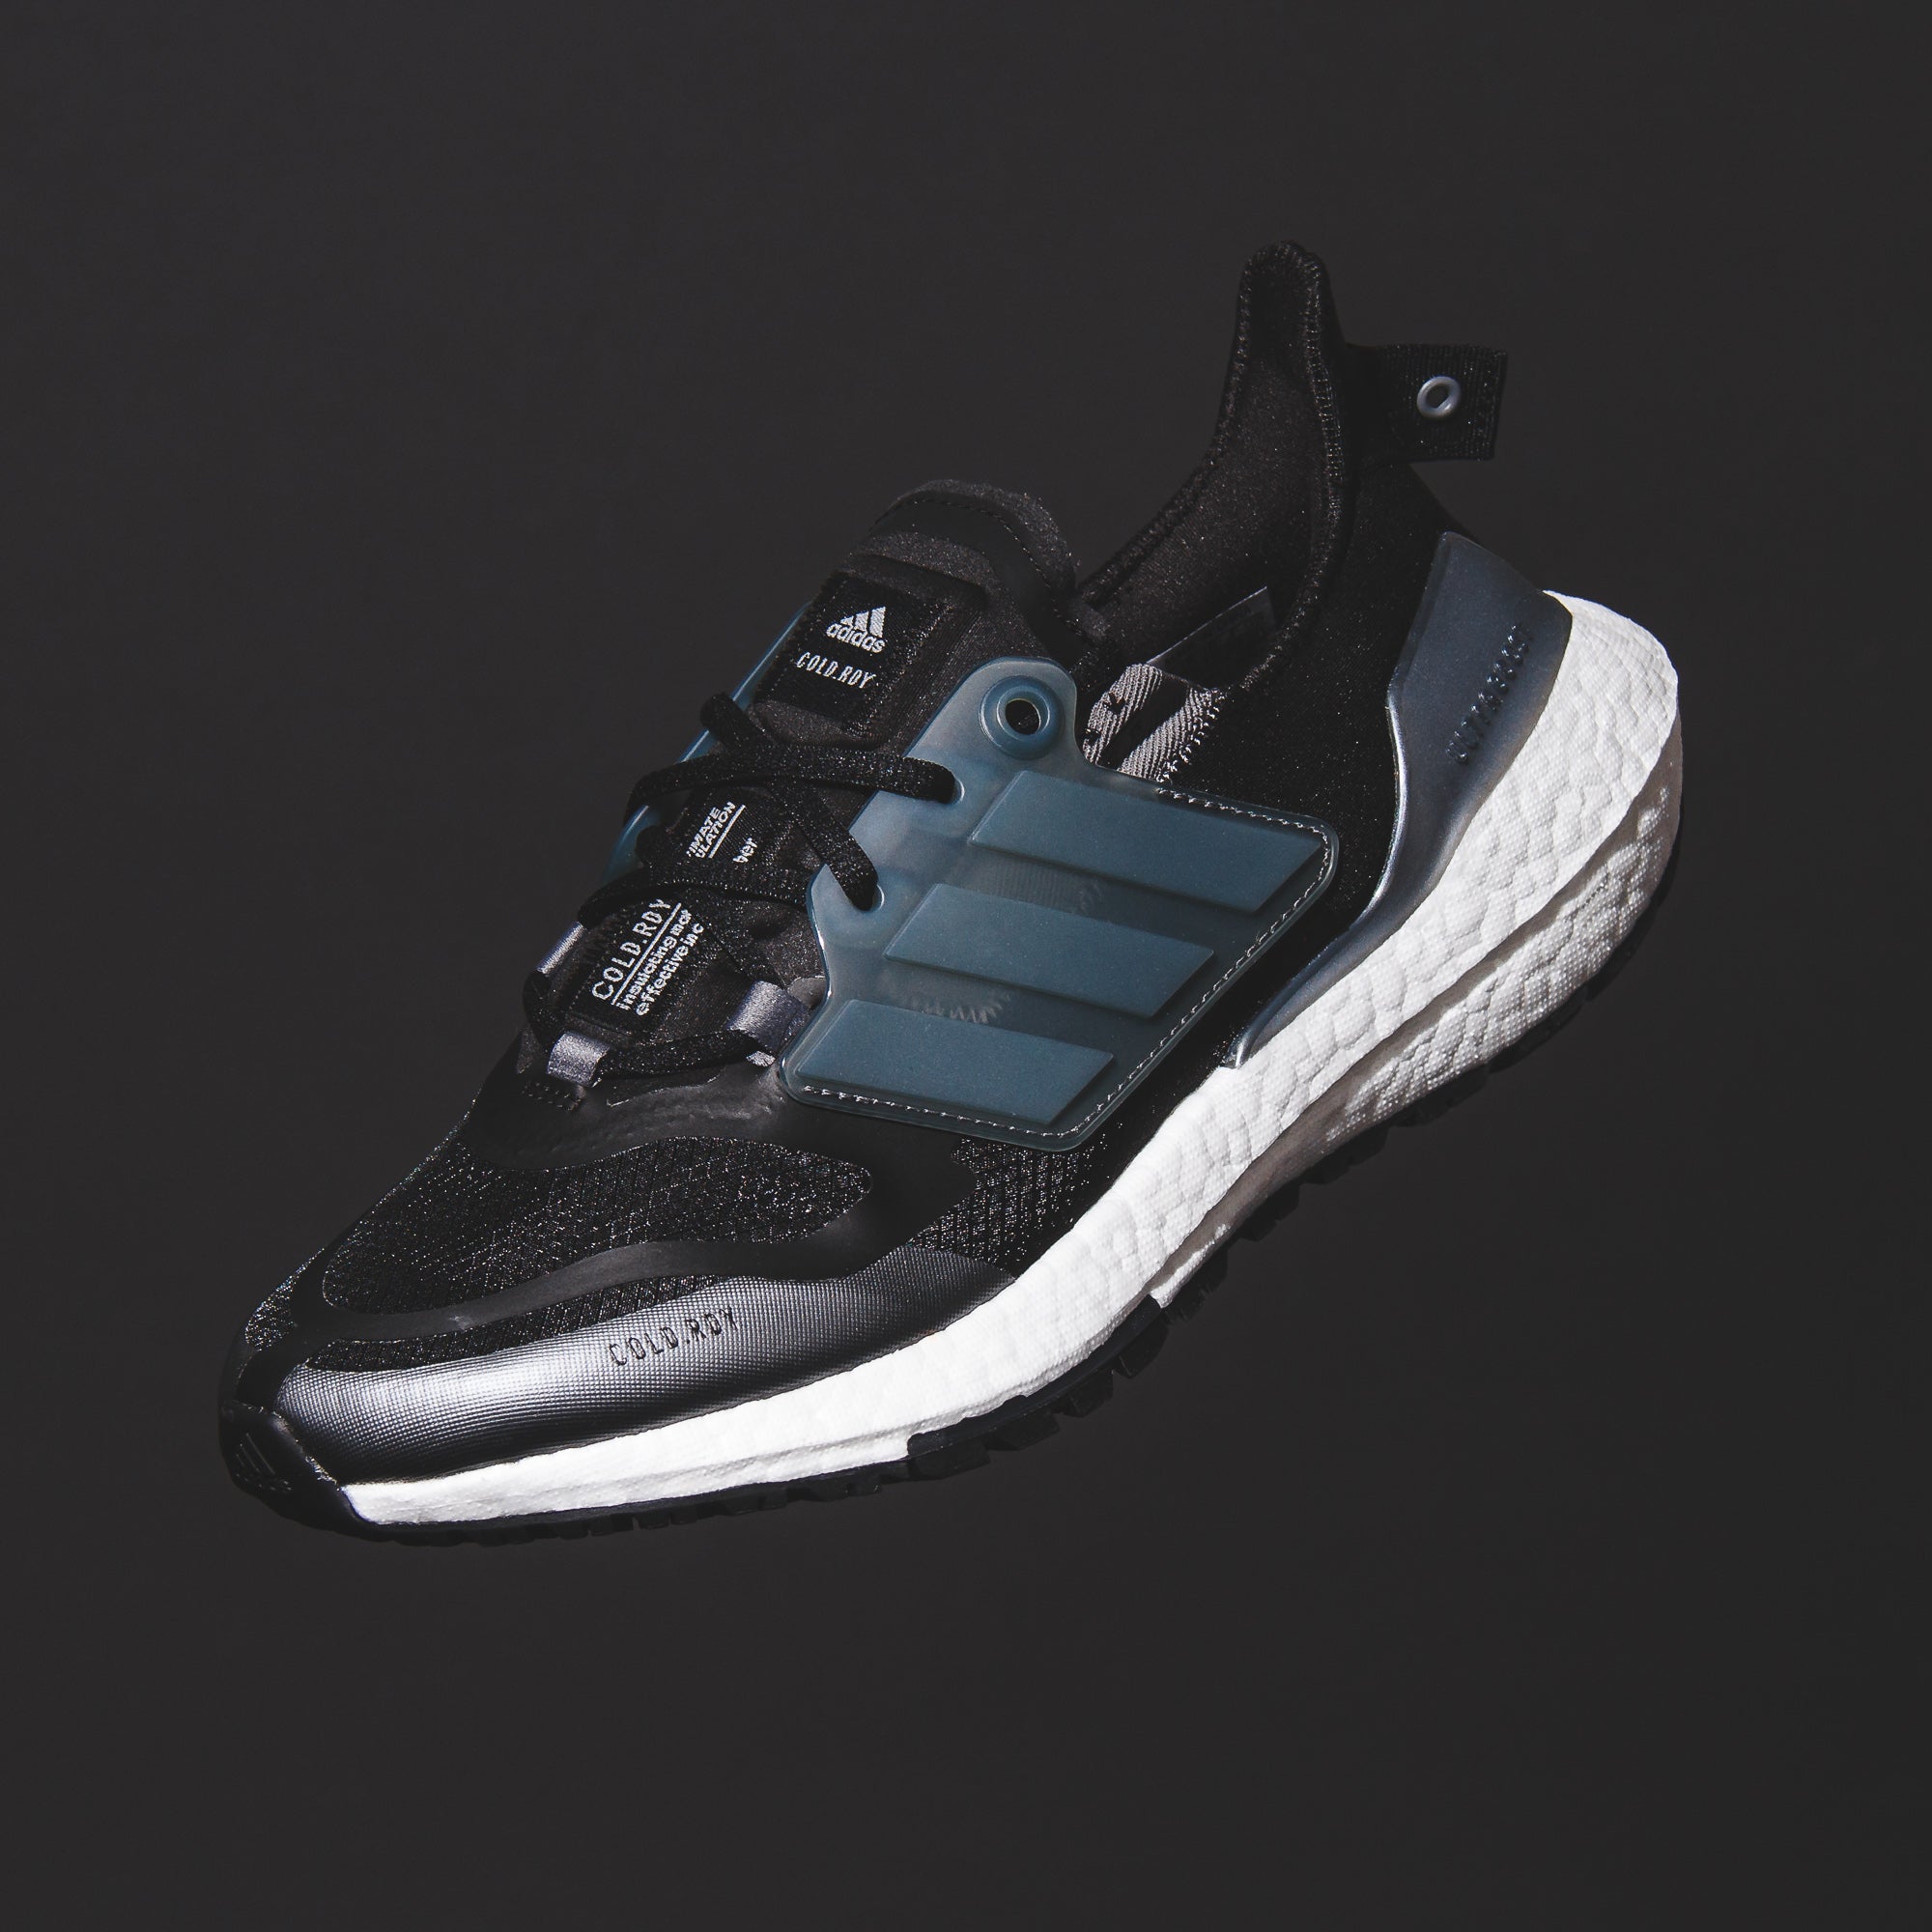 Louis Vuitton LV Run Away Marathon Running Shoes/Sneakers 1A3CVZ